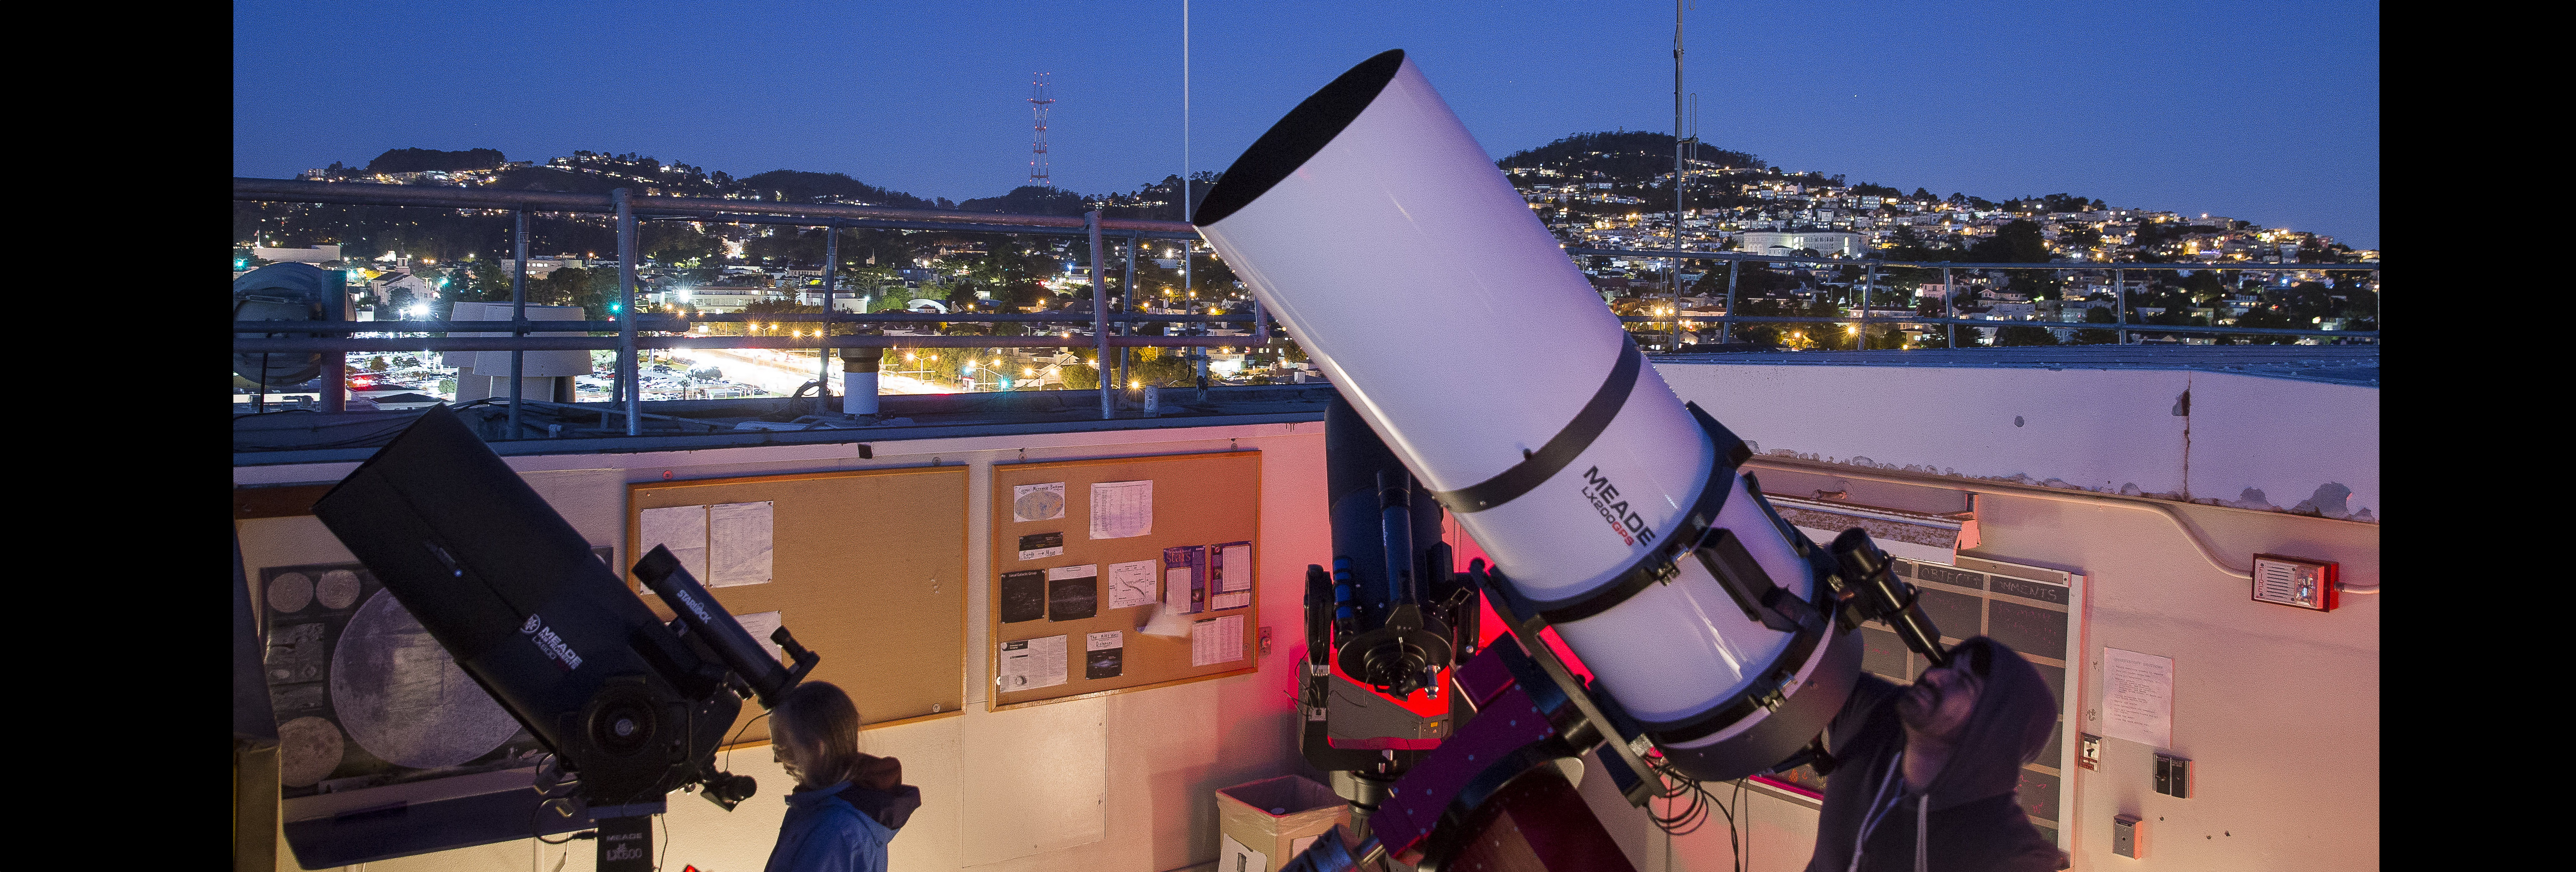 SFSU Observatory at night